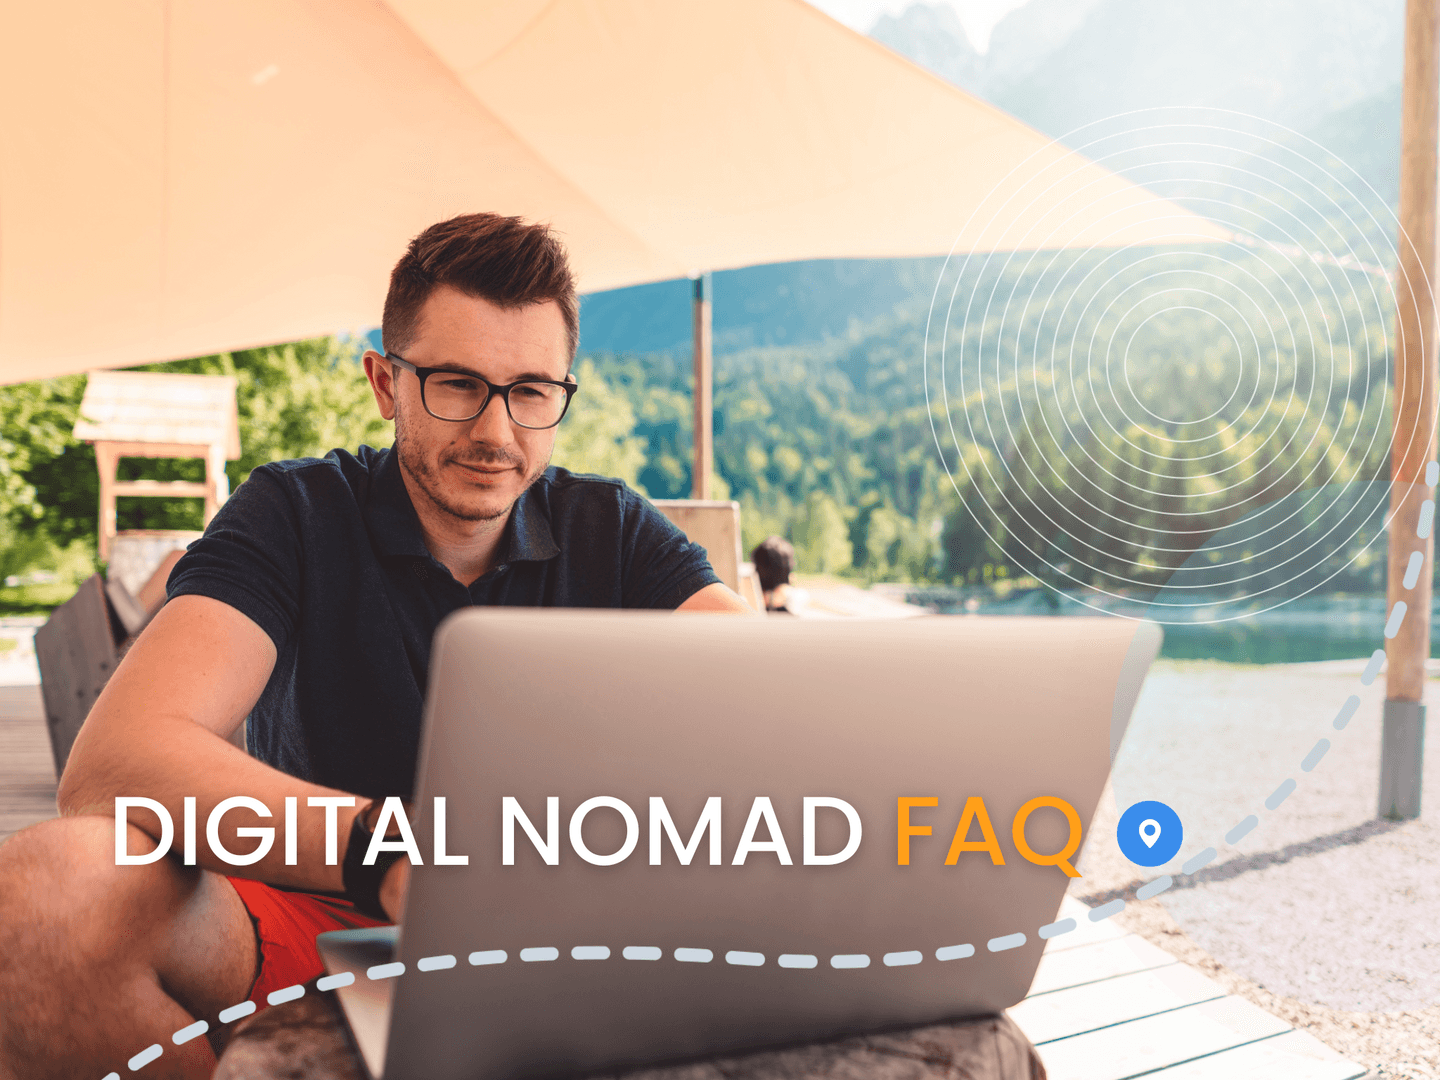 Digital Nomad FAQ: Who Are Digital Nomads